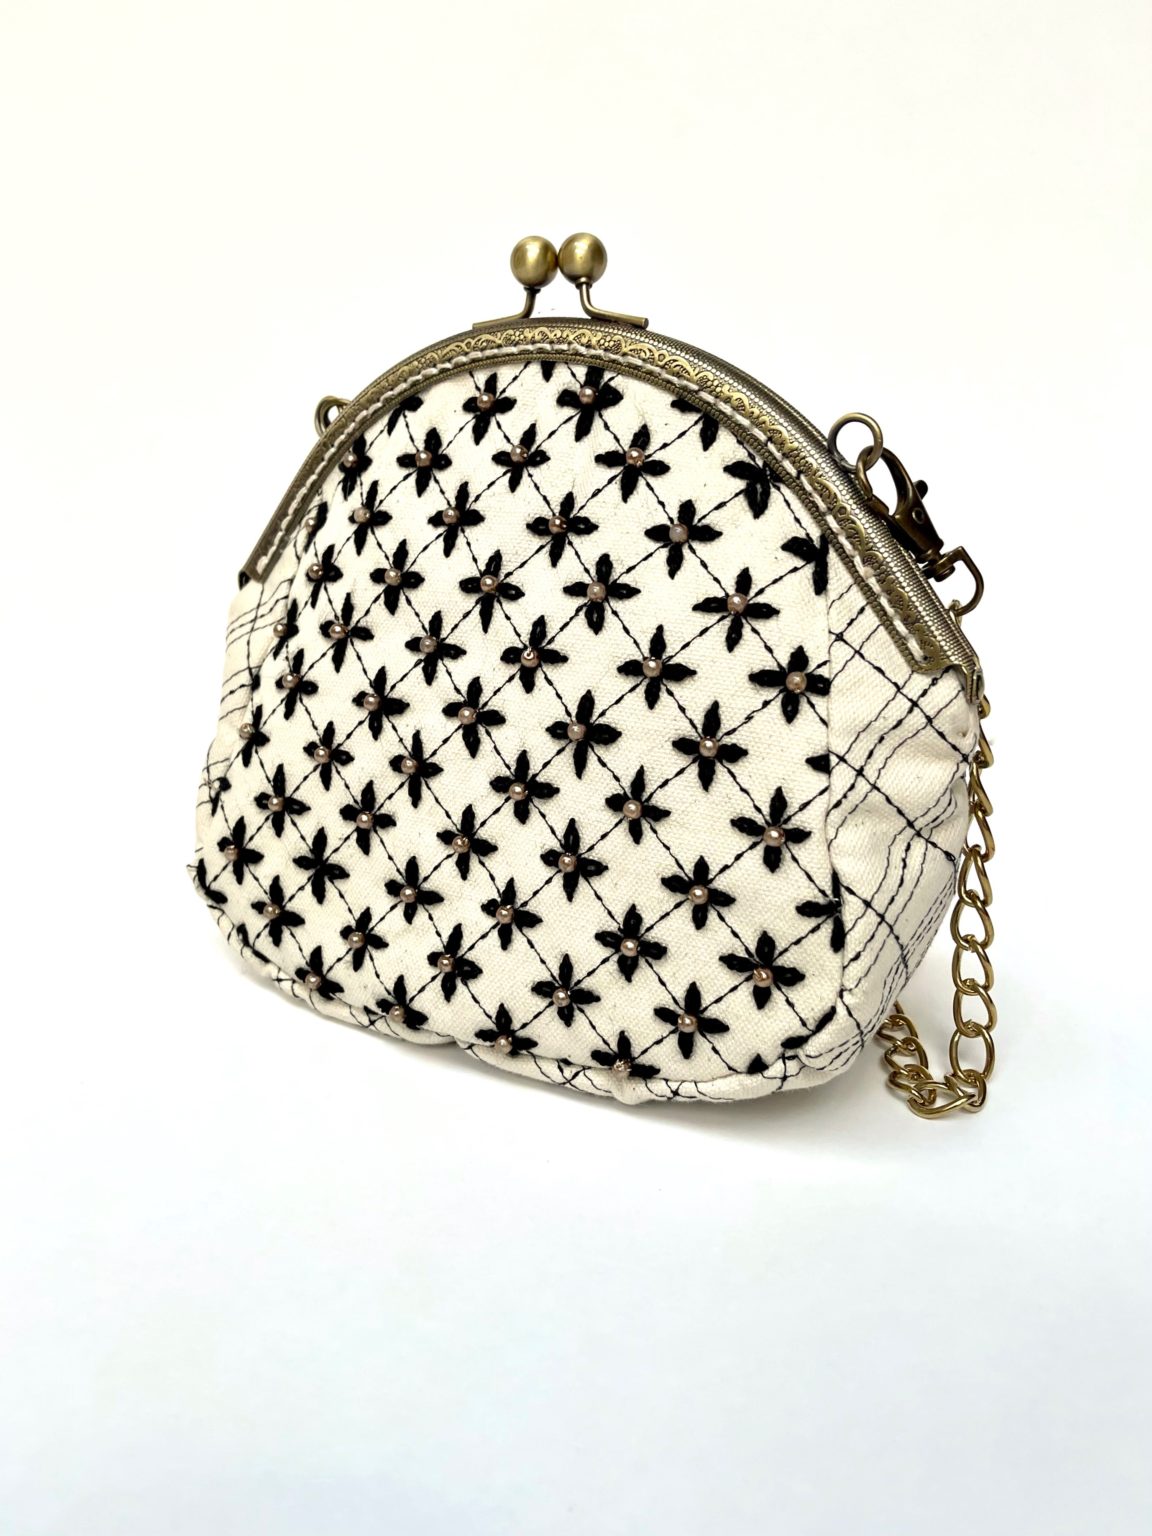 Paper Handbags, Purses & Wallets - Free Patterns! - Jennifer Maker